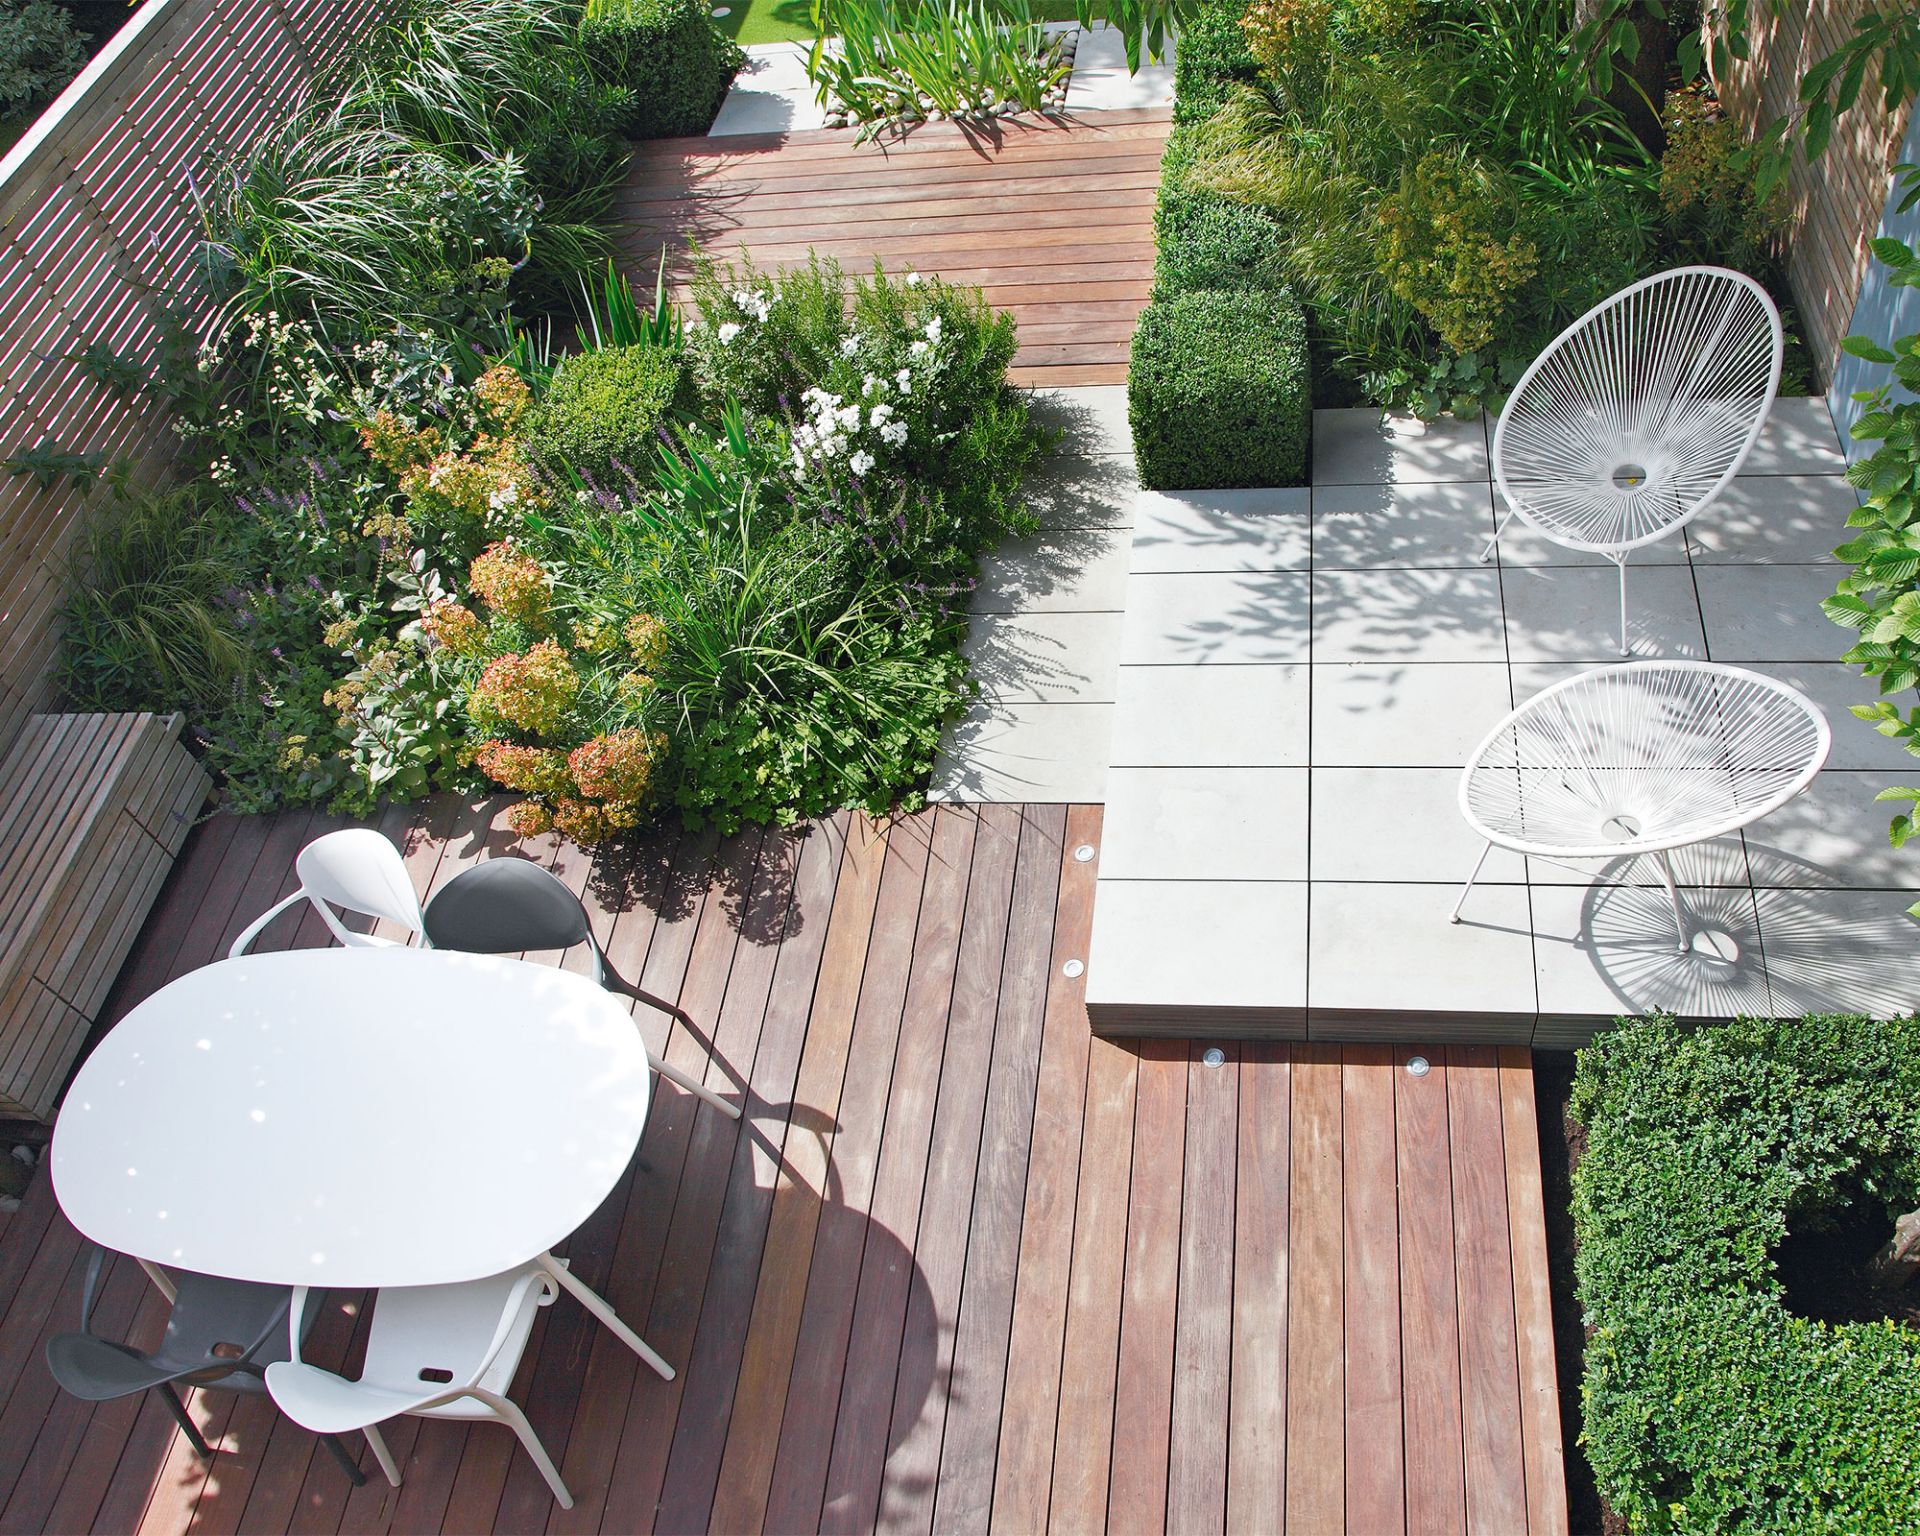 Patio ideas – 27 ways to create a stylish garden patio area